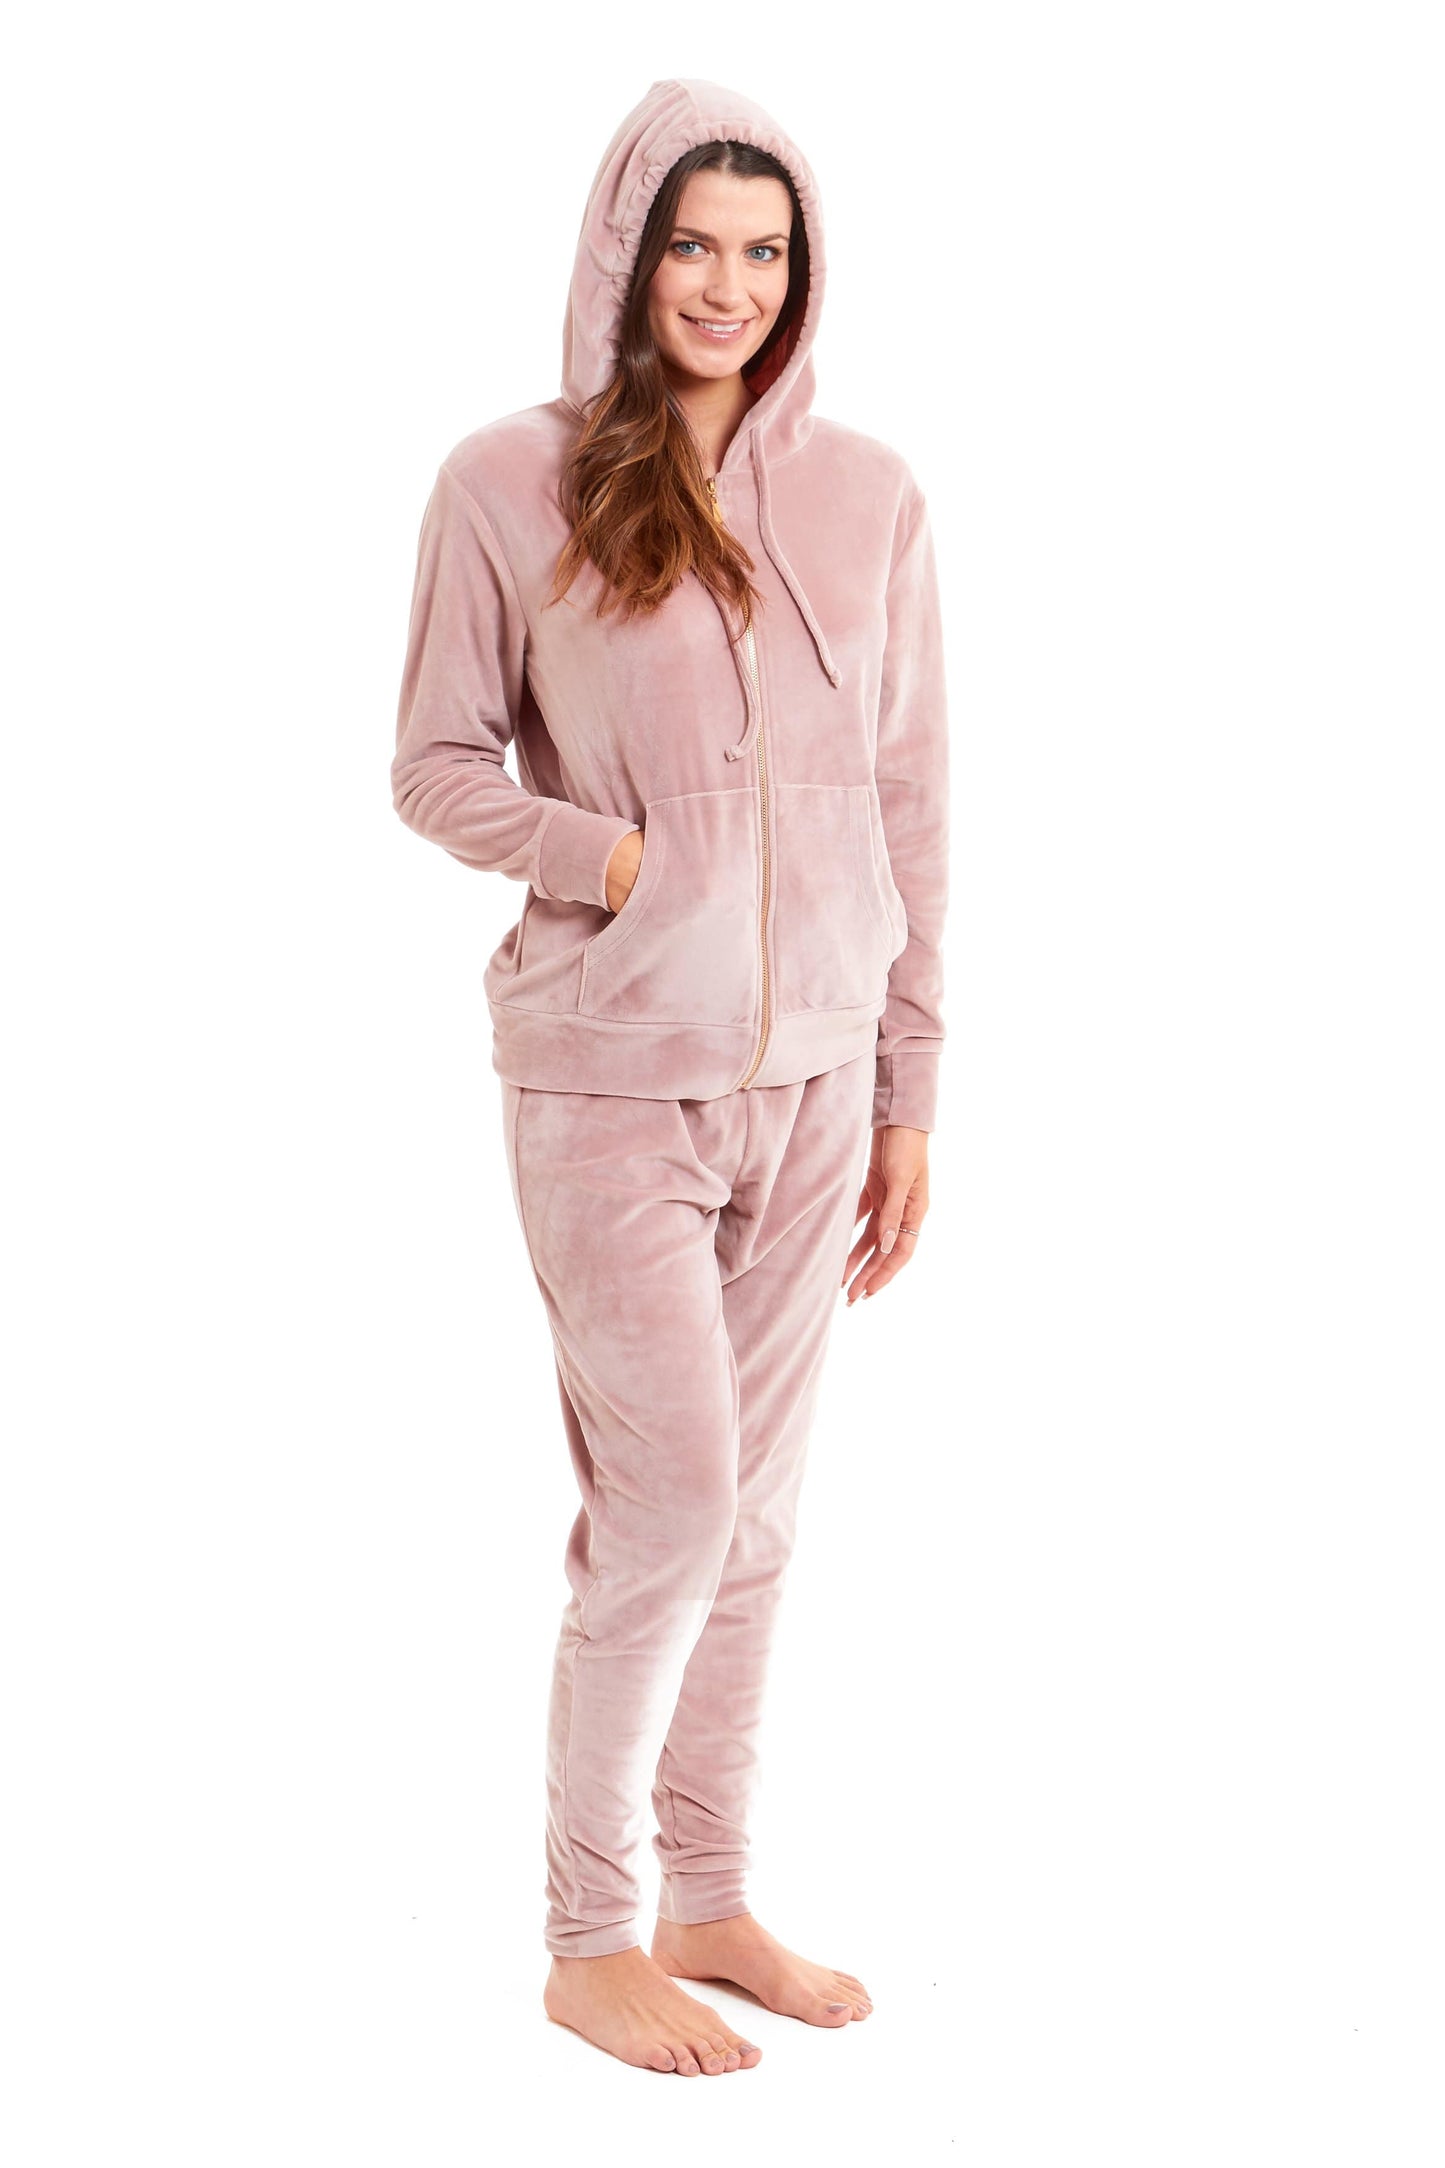 Hooded Velour Lounge Set Tracksuit Zipped Pyjama SMALL | UK 8-10 / DUSKY PINK Daisy Dreamer Pyjamas